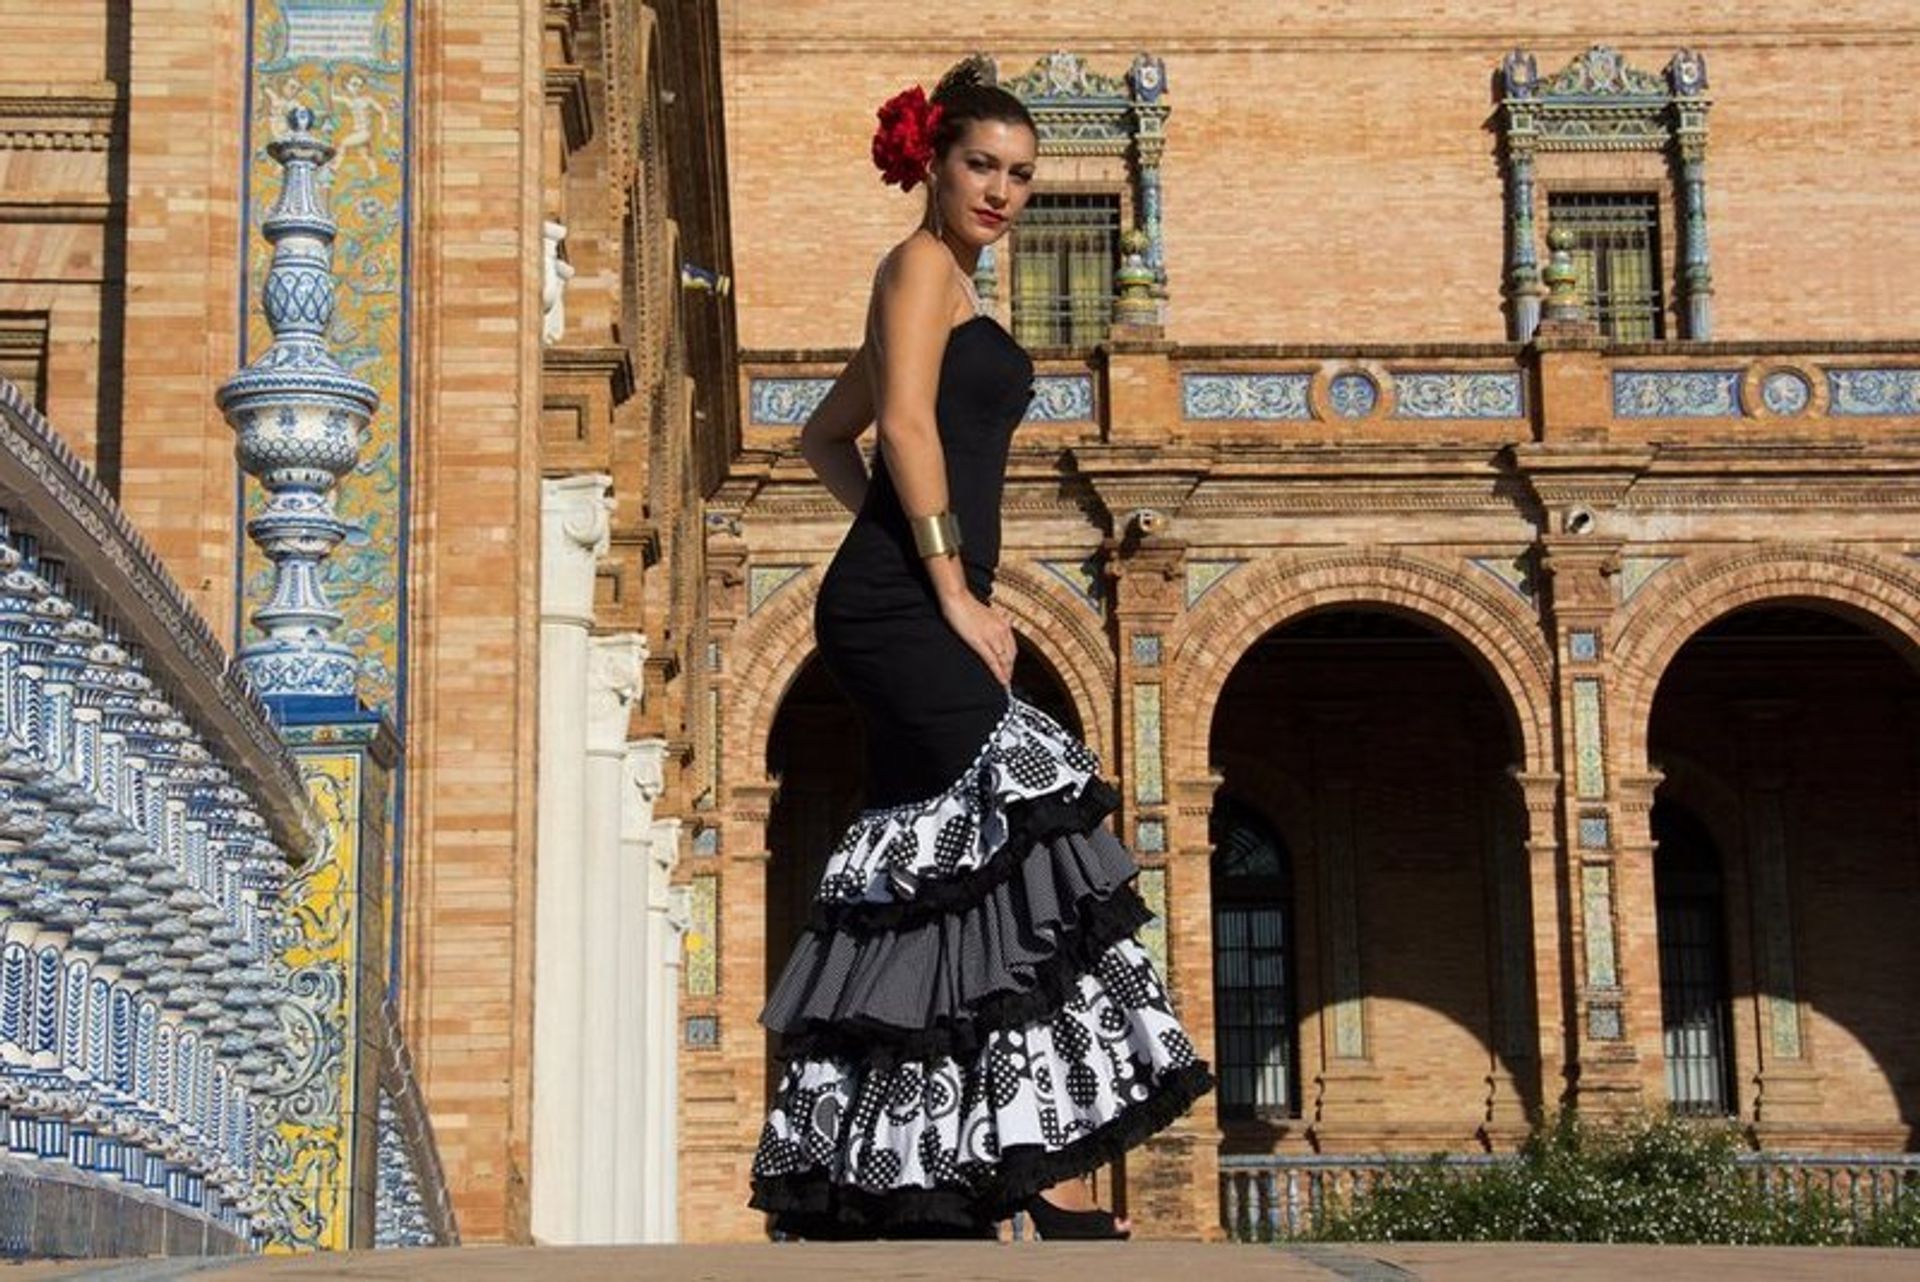 Flamenco dancer in Plaza de Espana, Seville - Andalucia